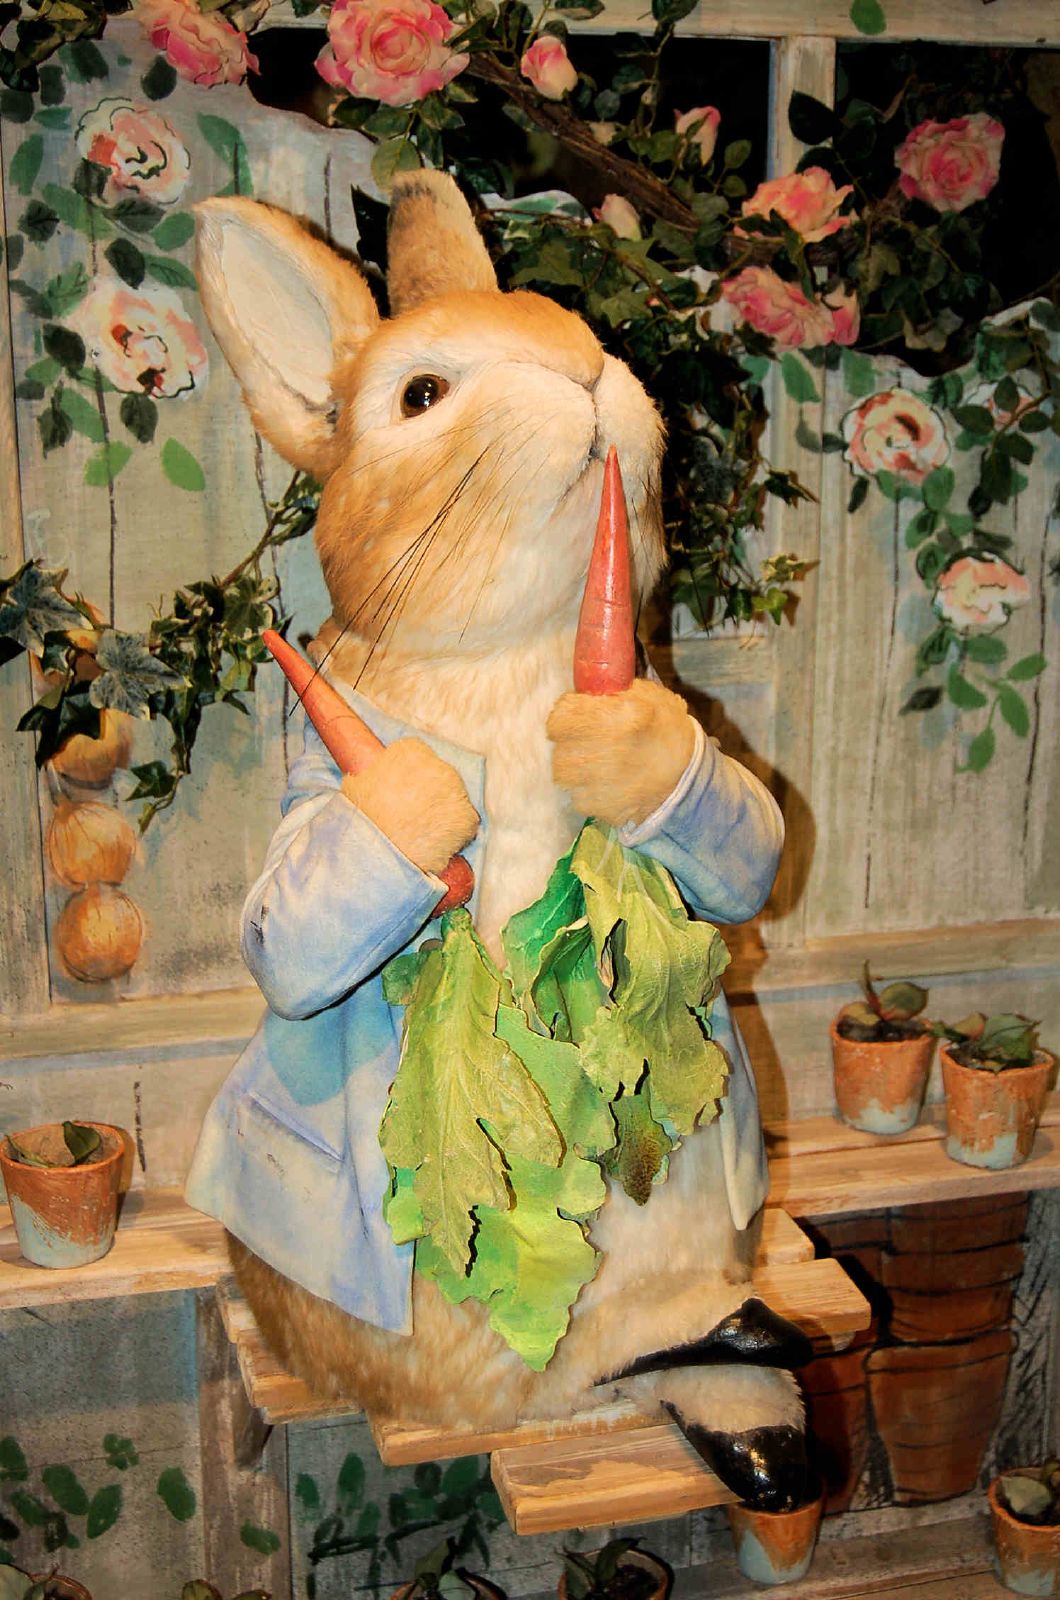 the stuffed rabbit is eating lettuce outside